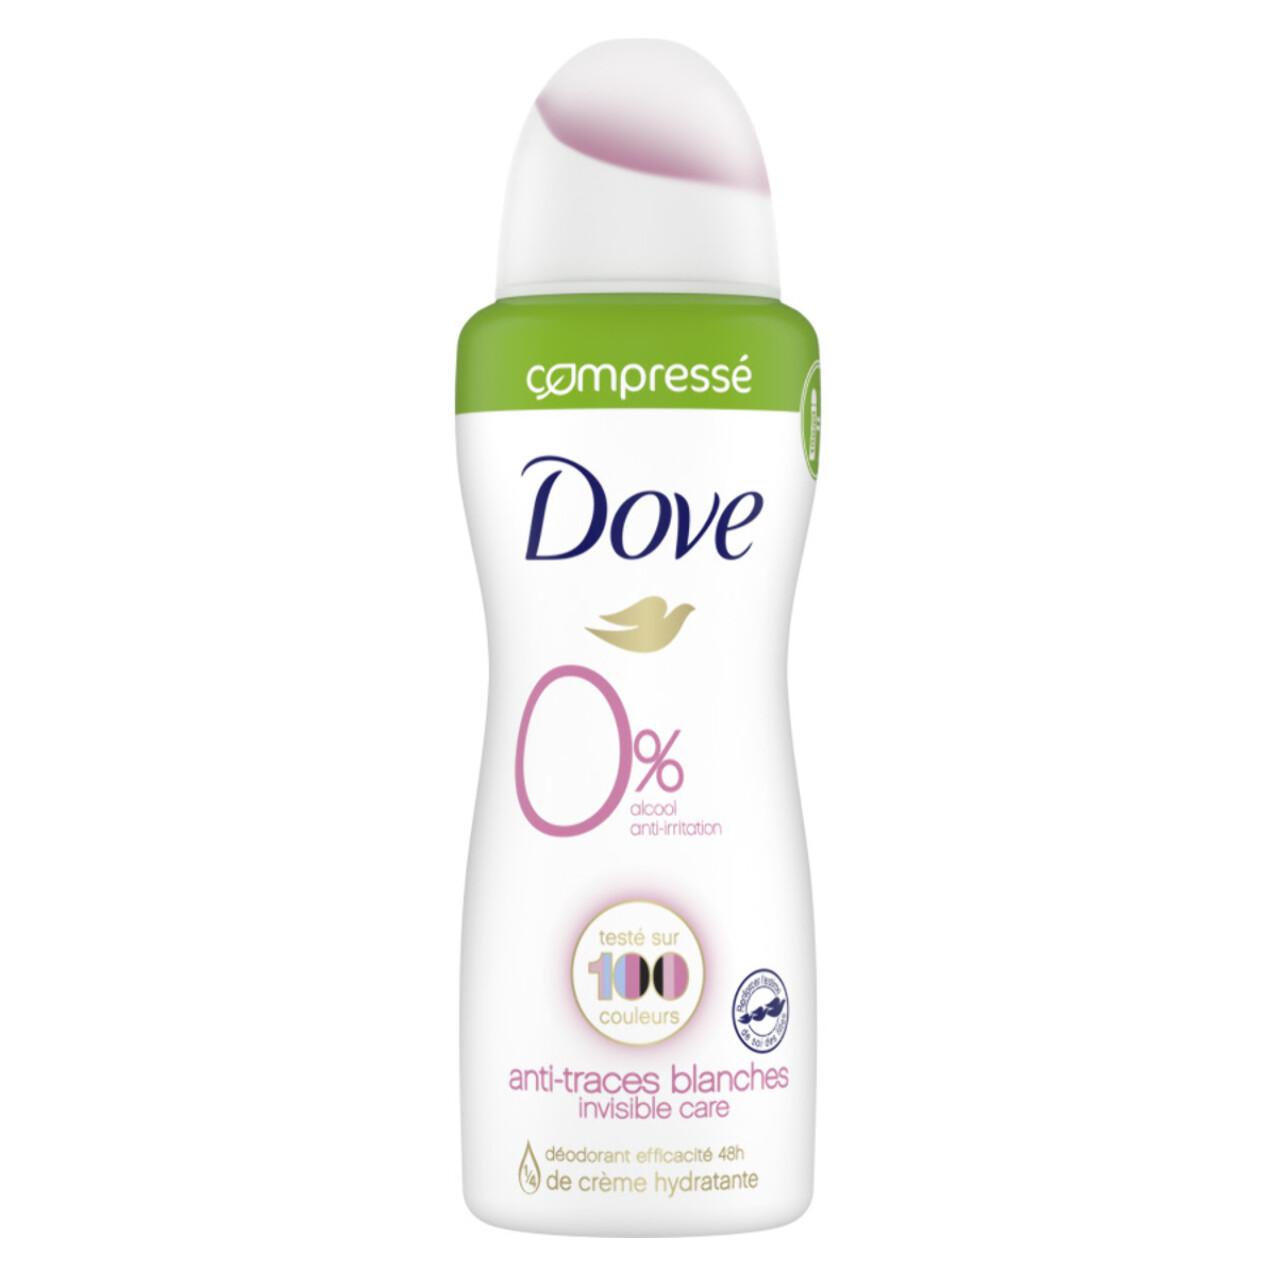 Pack de 3 - Dove 0% Déodorant Femme Spray Compressé Invisible Care 100ml